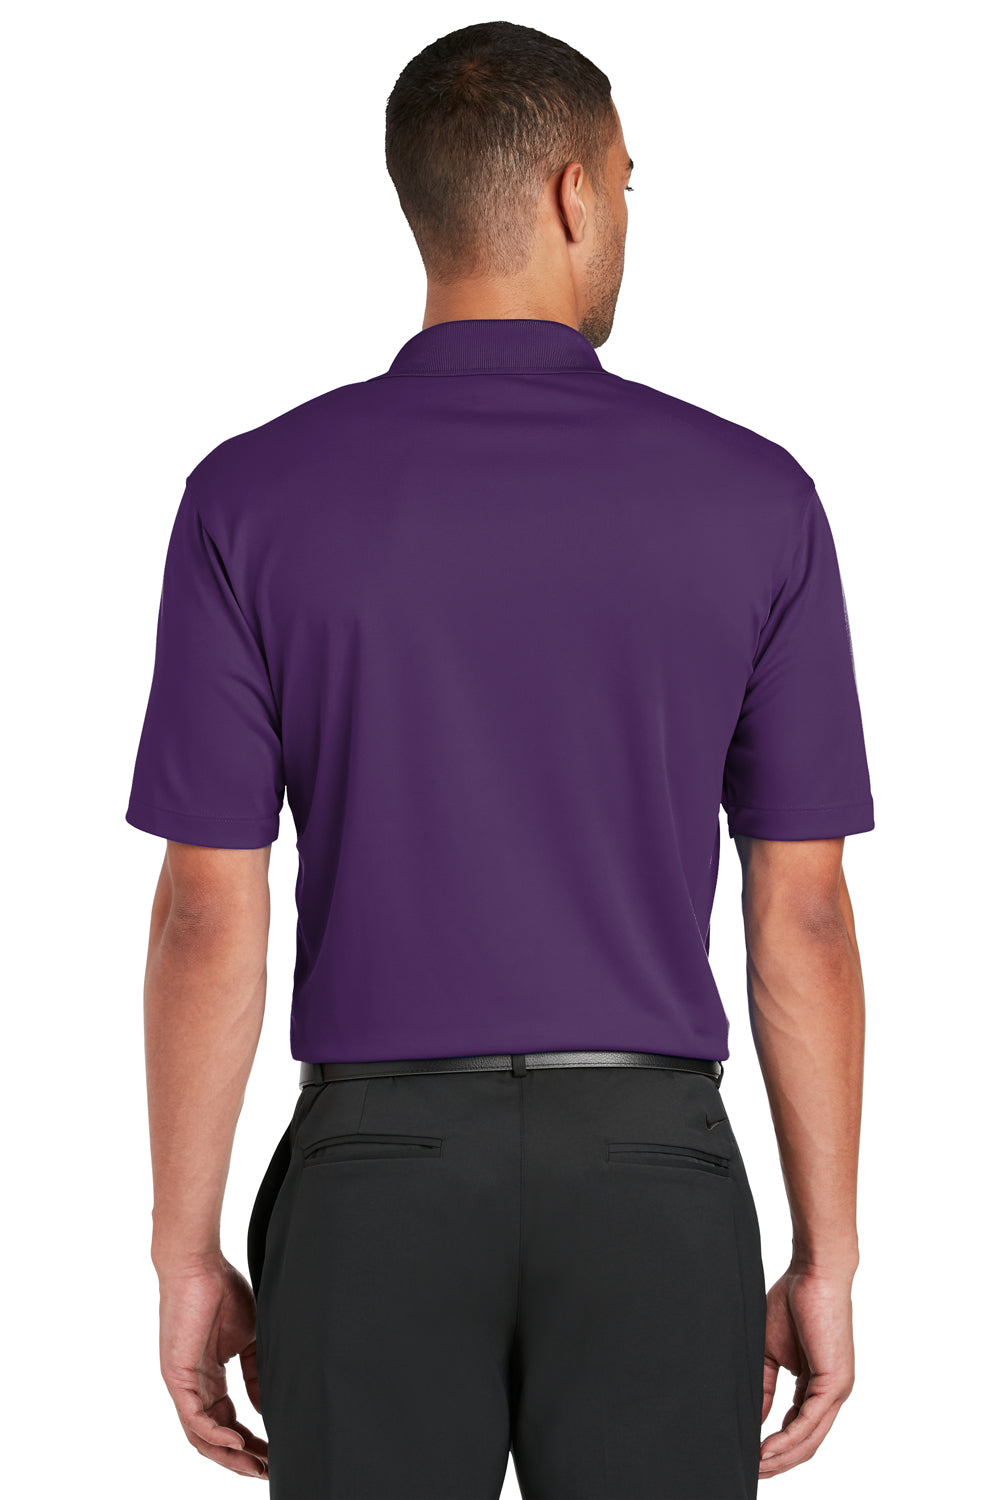 Nike 363807 Mens Dri-Fit Moisture Wicking Short Sleeve Polo Shirt Purple Back